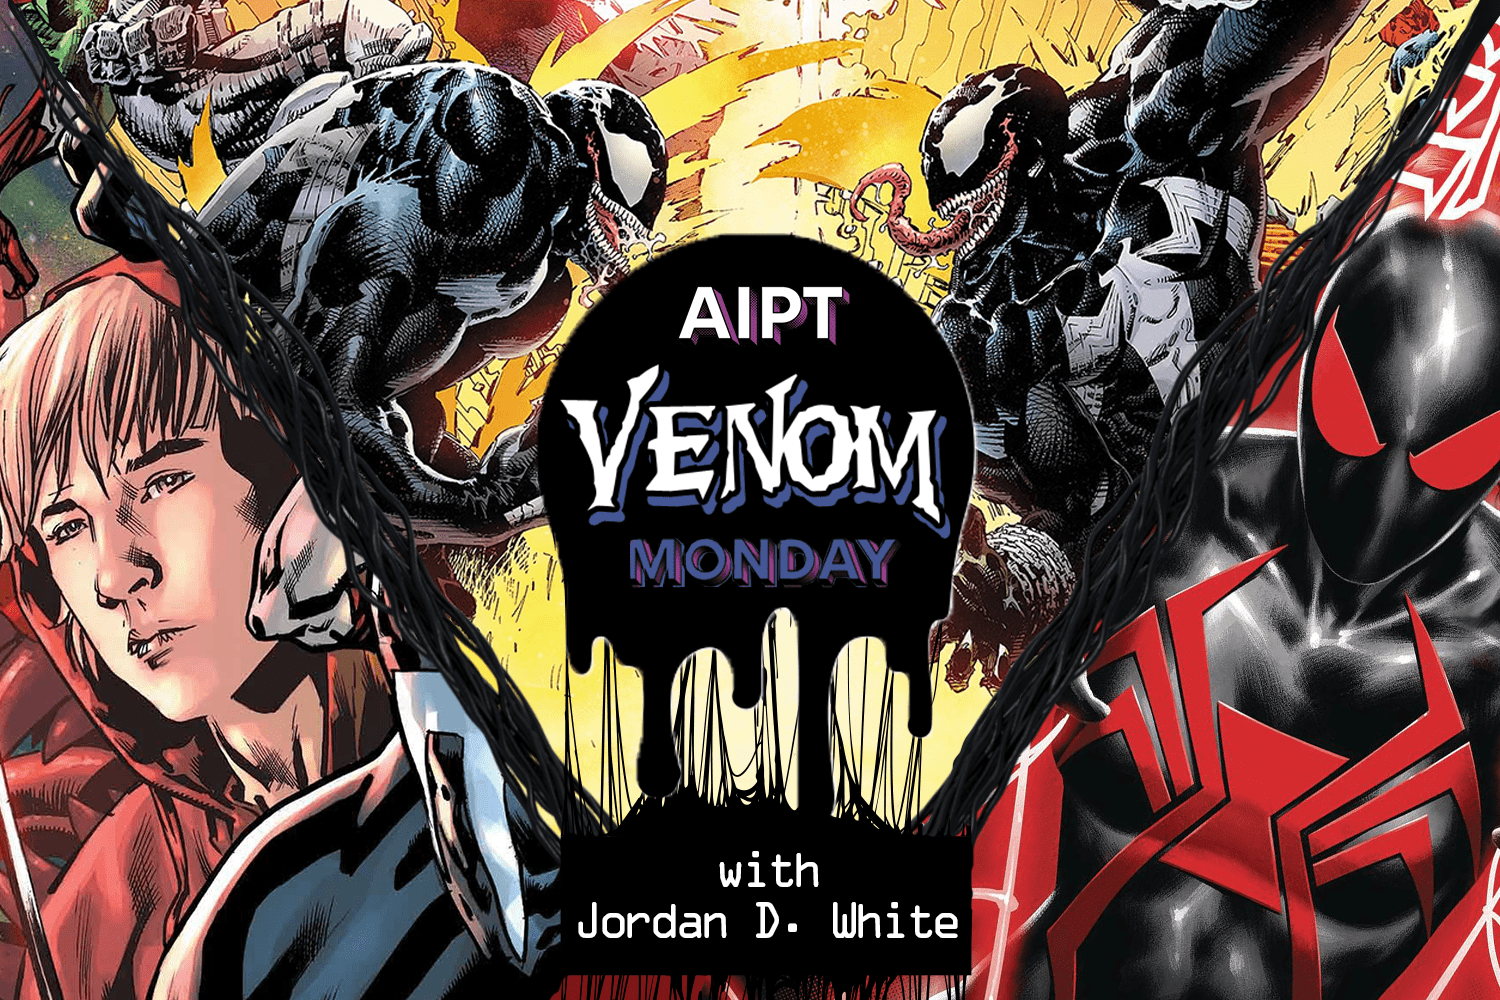 Venom Monday #1 (XMM LGY #245) - Jordan D. White Answers Ven-Fan Questions